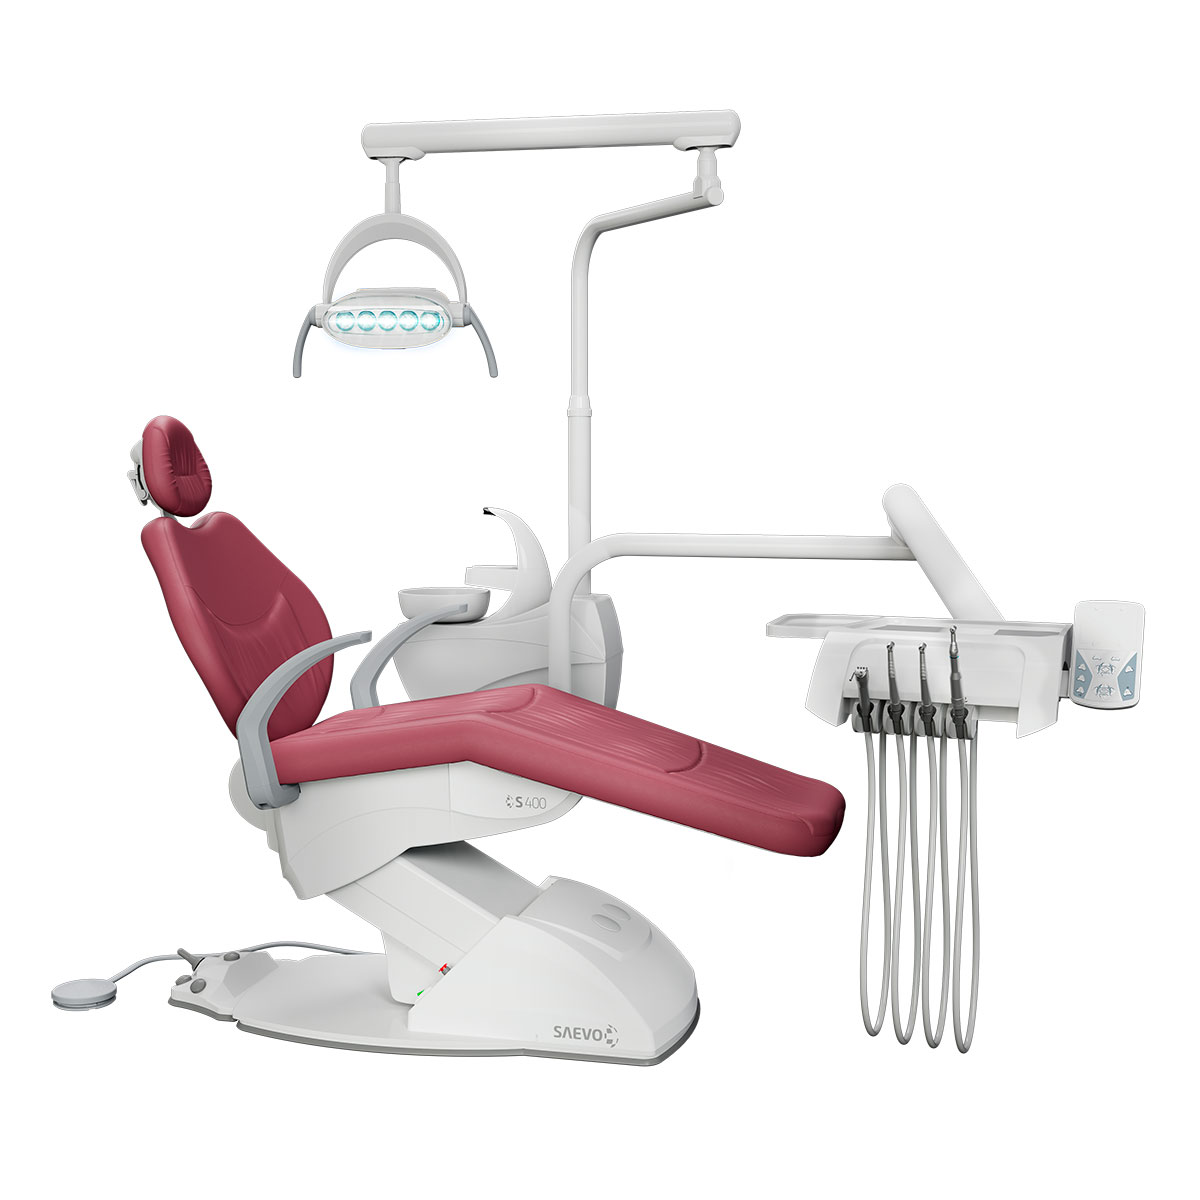 Consultório Odontológico – S401